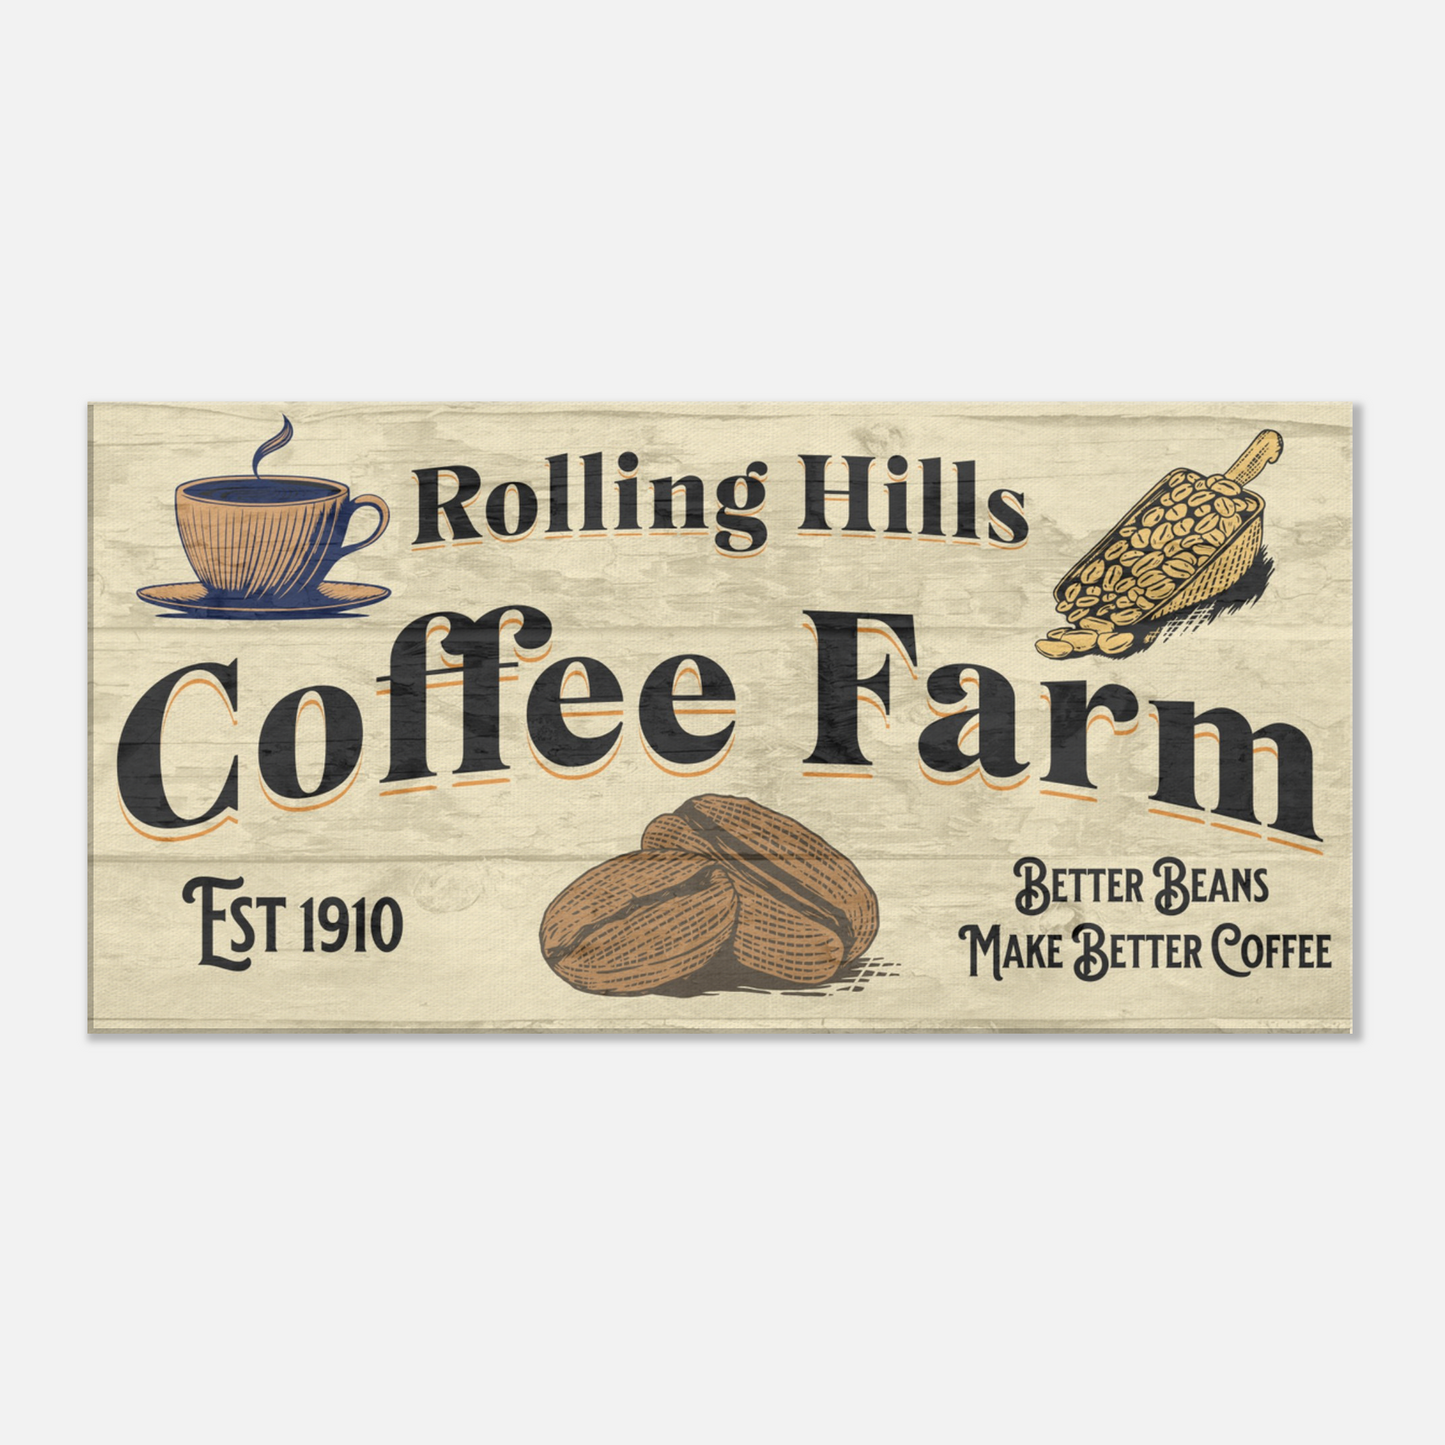 Rolling Hills Coffee Farm Canvas Prints by Java Good Coffee